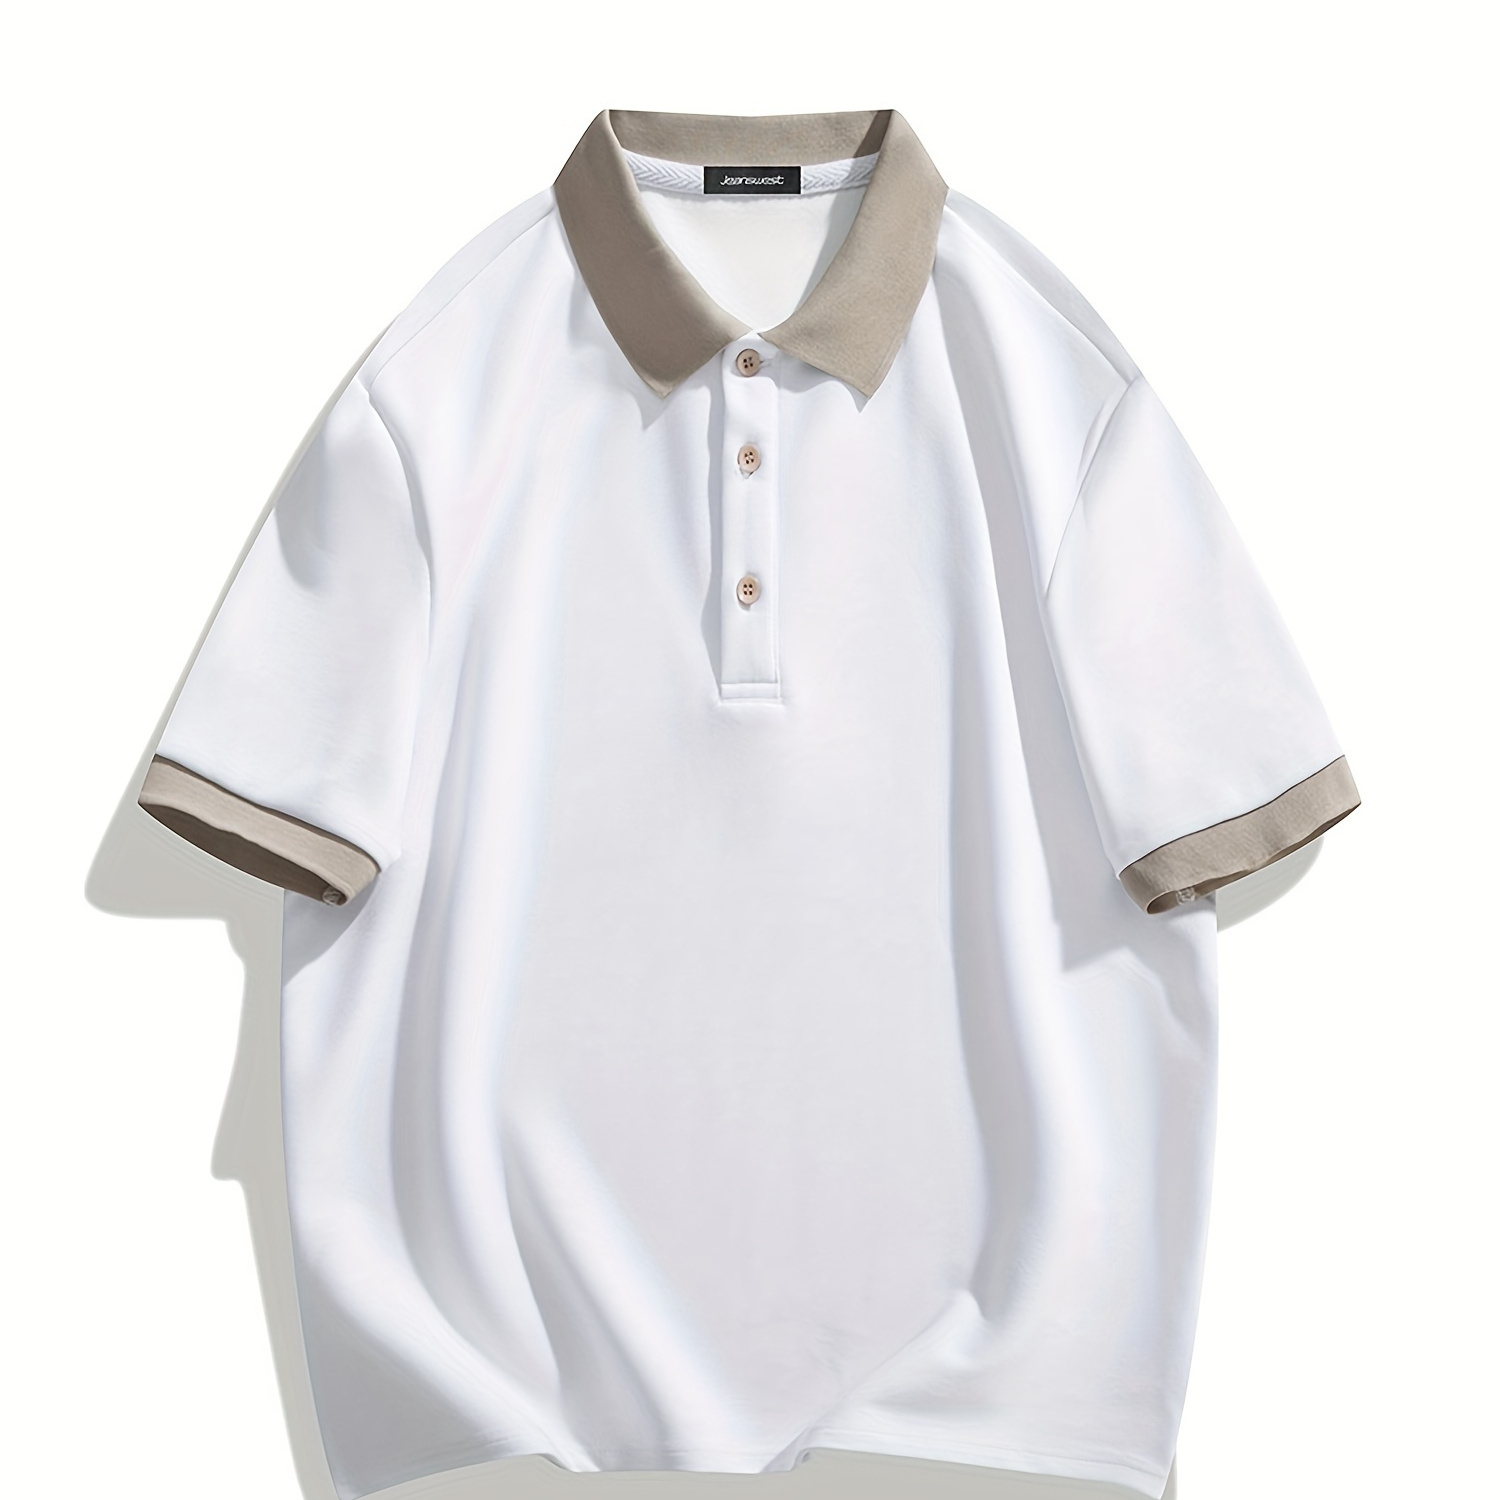 

Men's Color Matching Golf Shirt, Casual Short Sleeve Cotton Blend Lapel Shirt For Outdoor